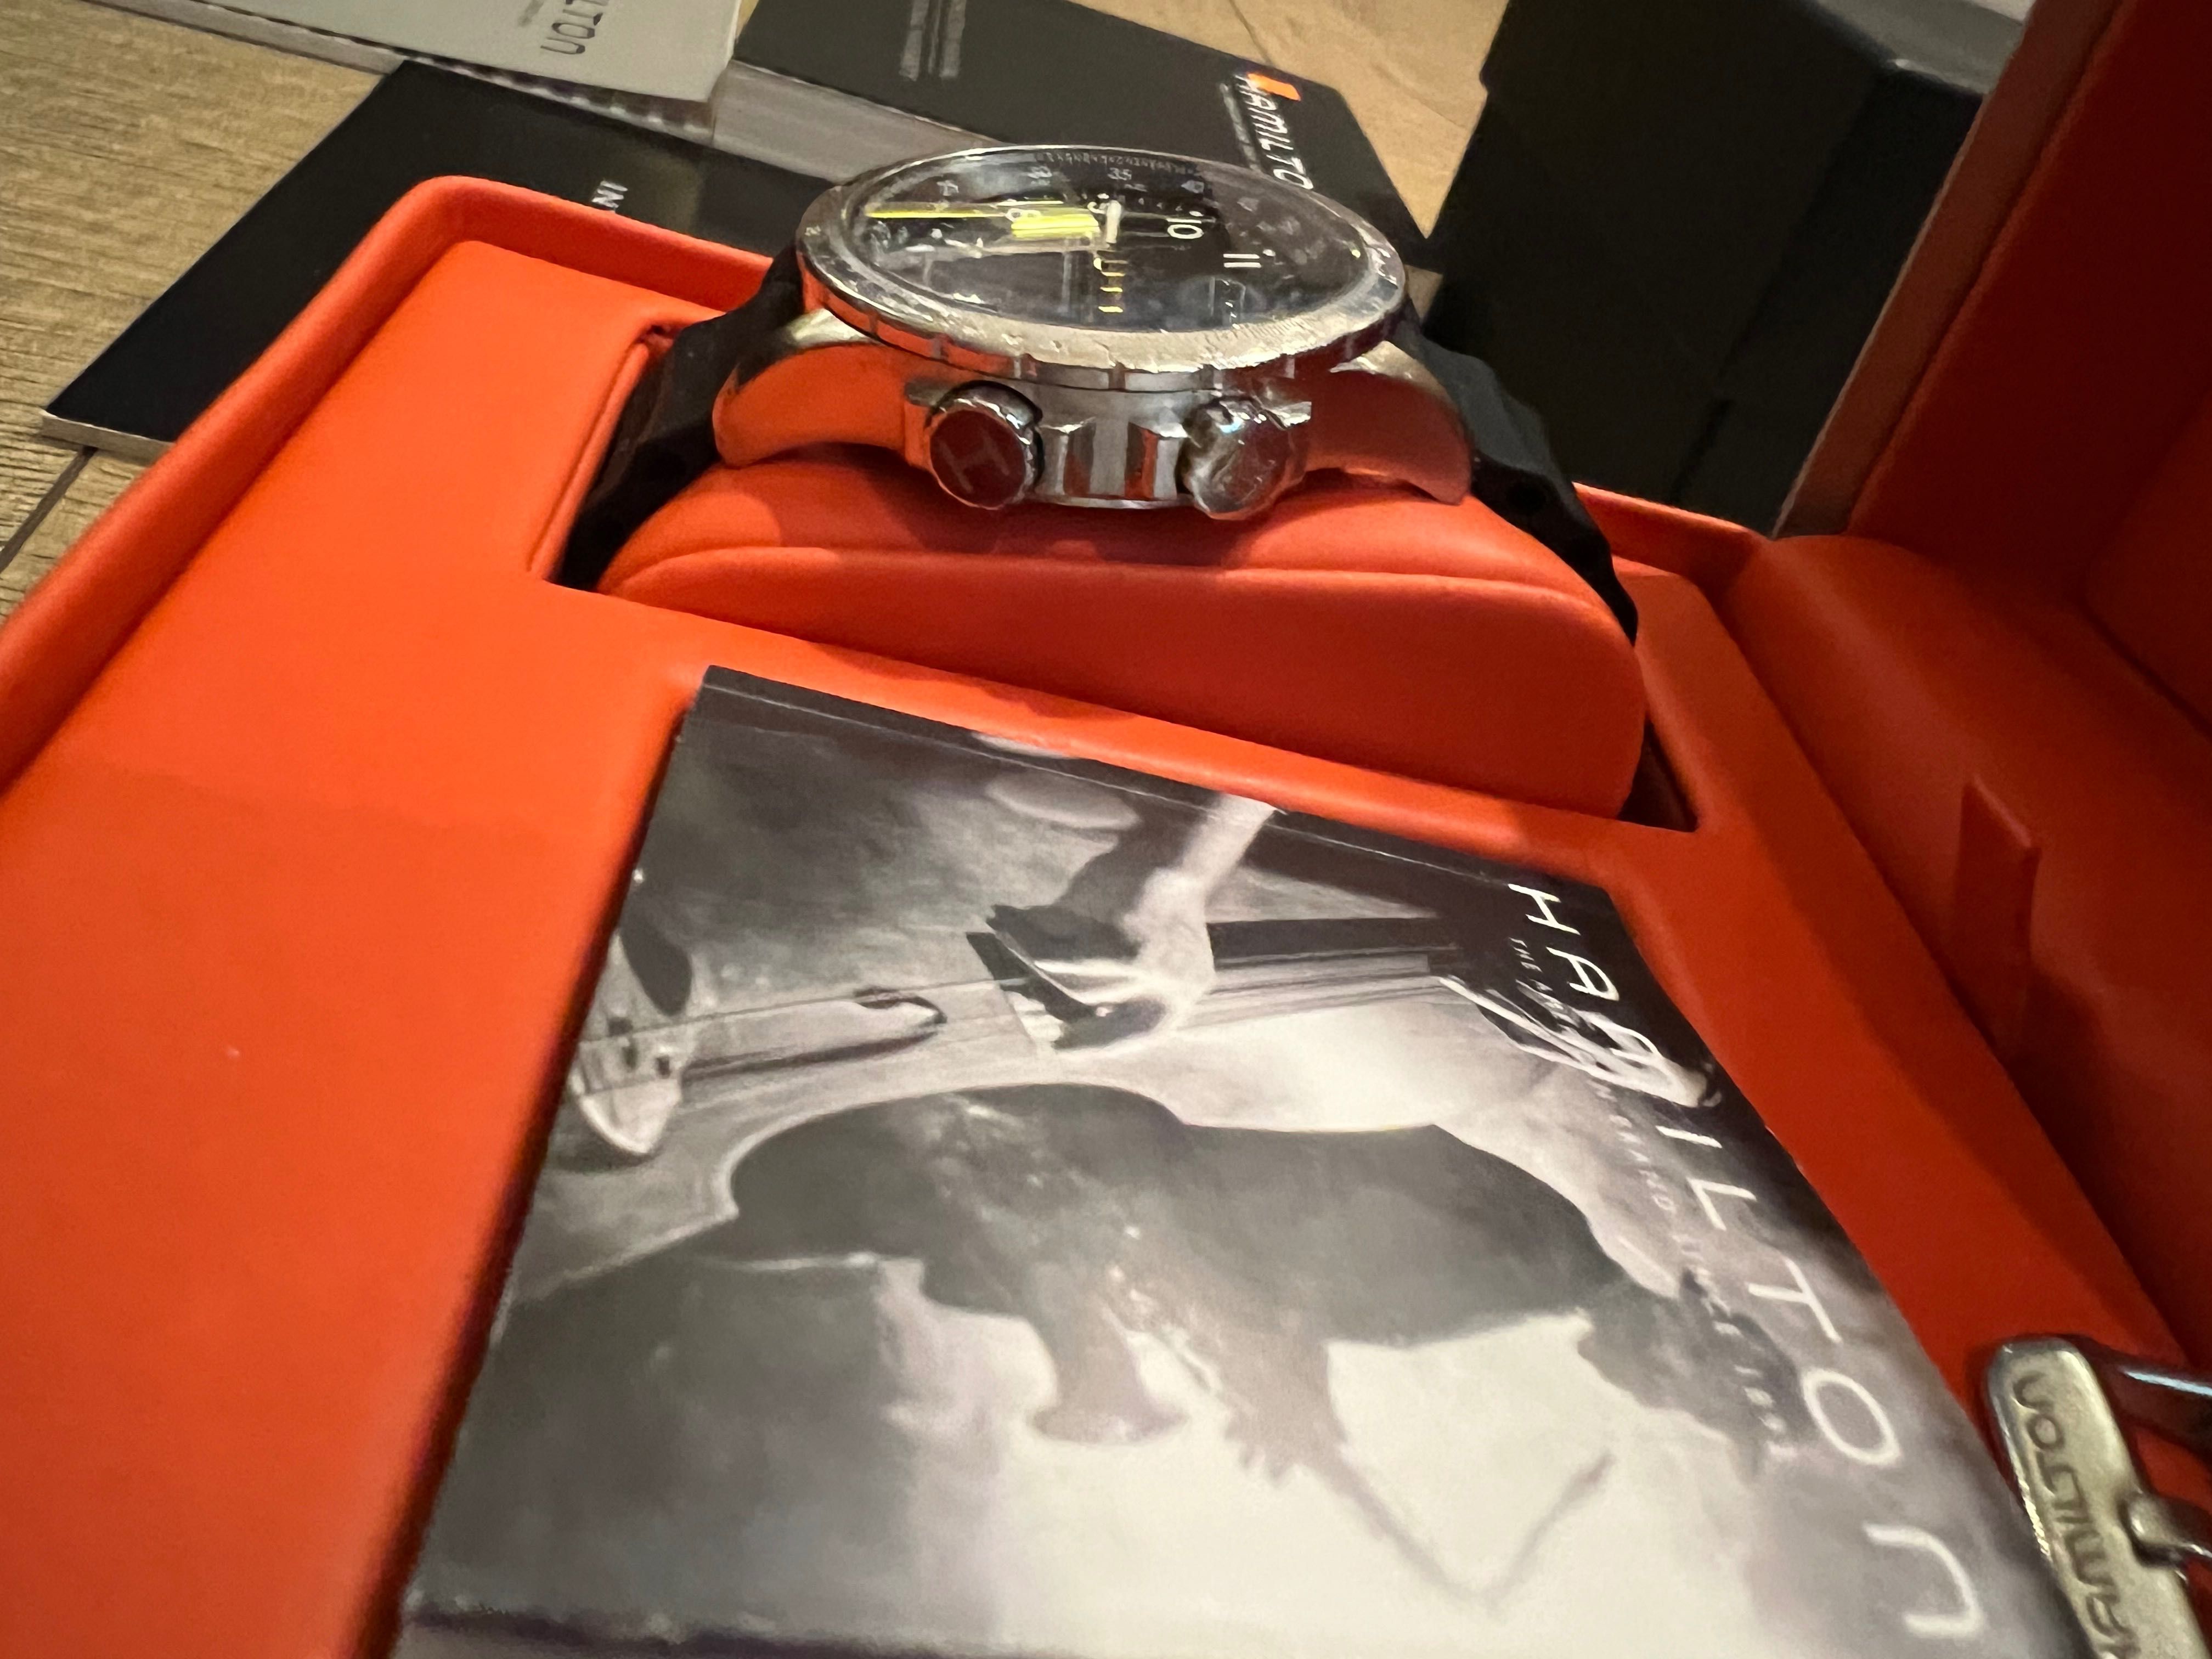 Hamilton ETO Aviator chrono швейцарски мъжки часовник